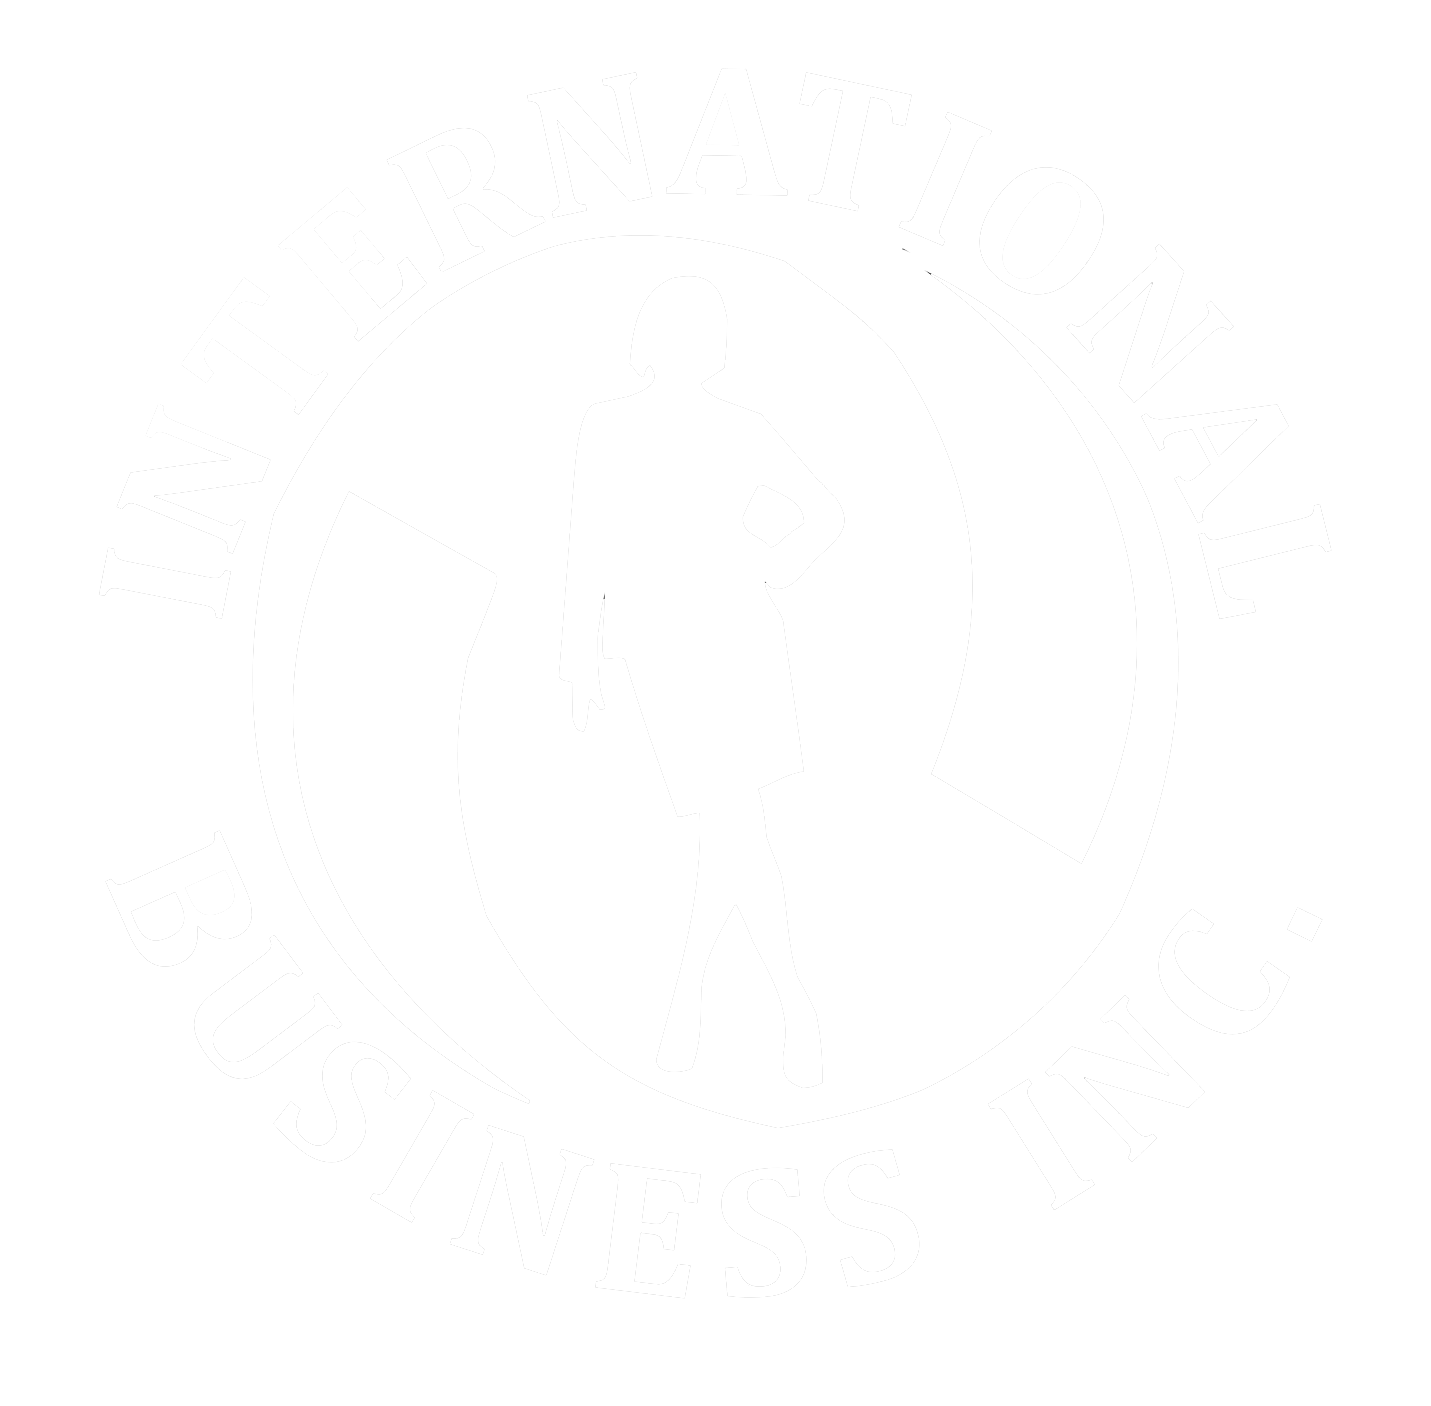 International Business Inc.